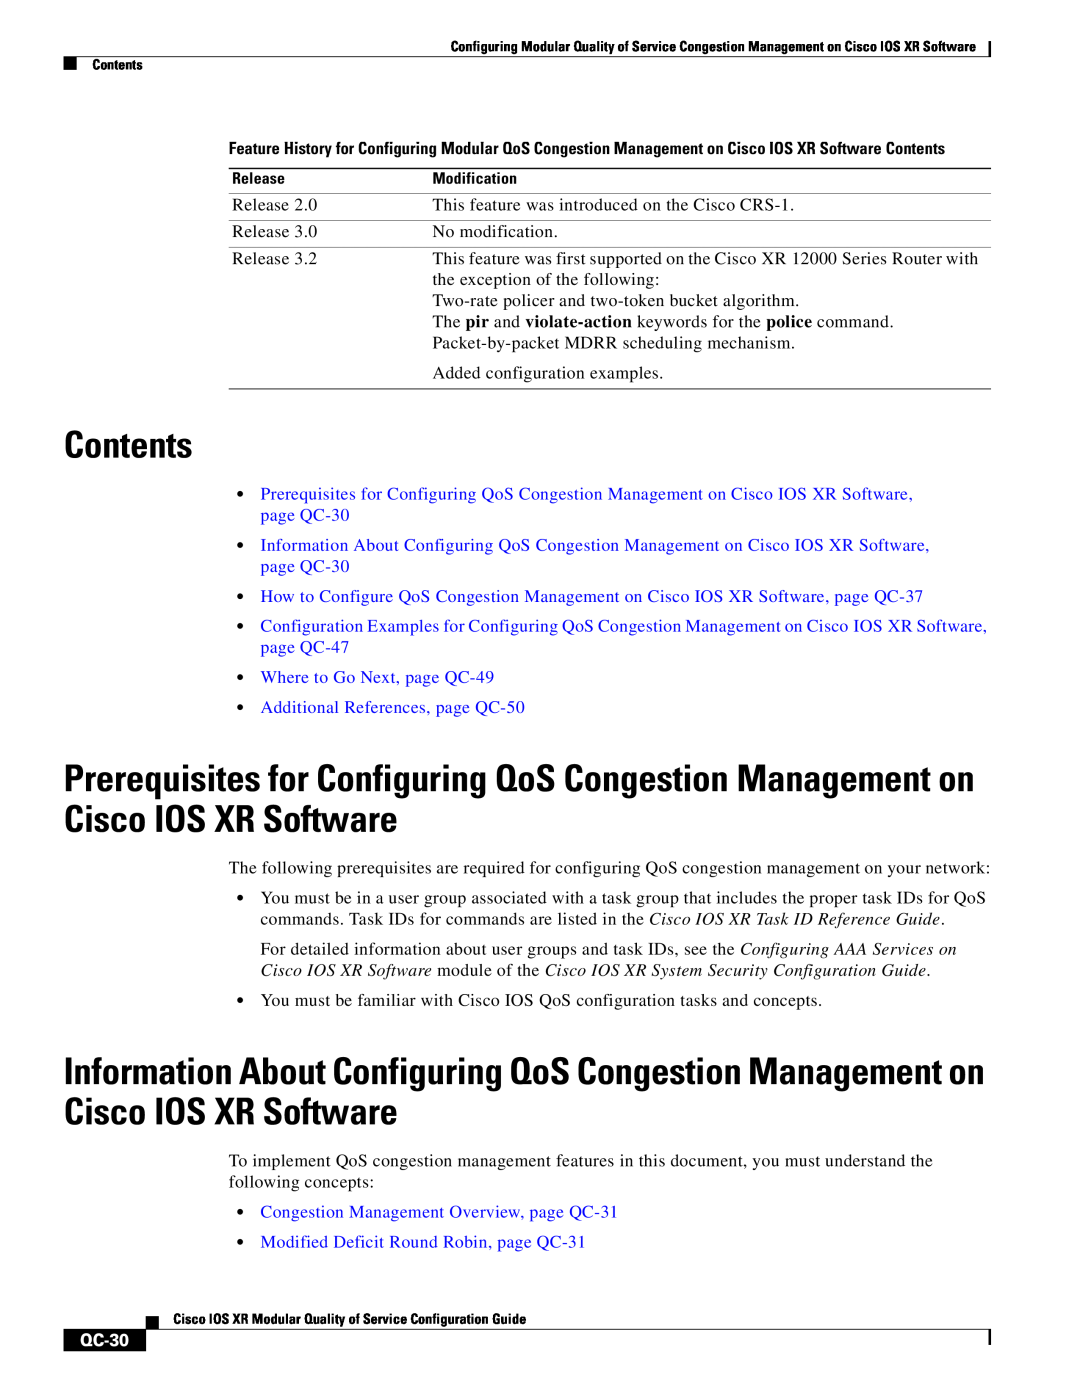 Cisco Systems QC-29 manual Contents 